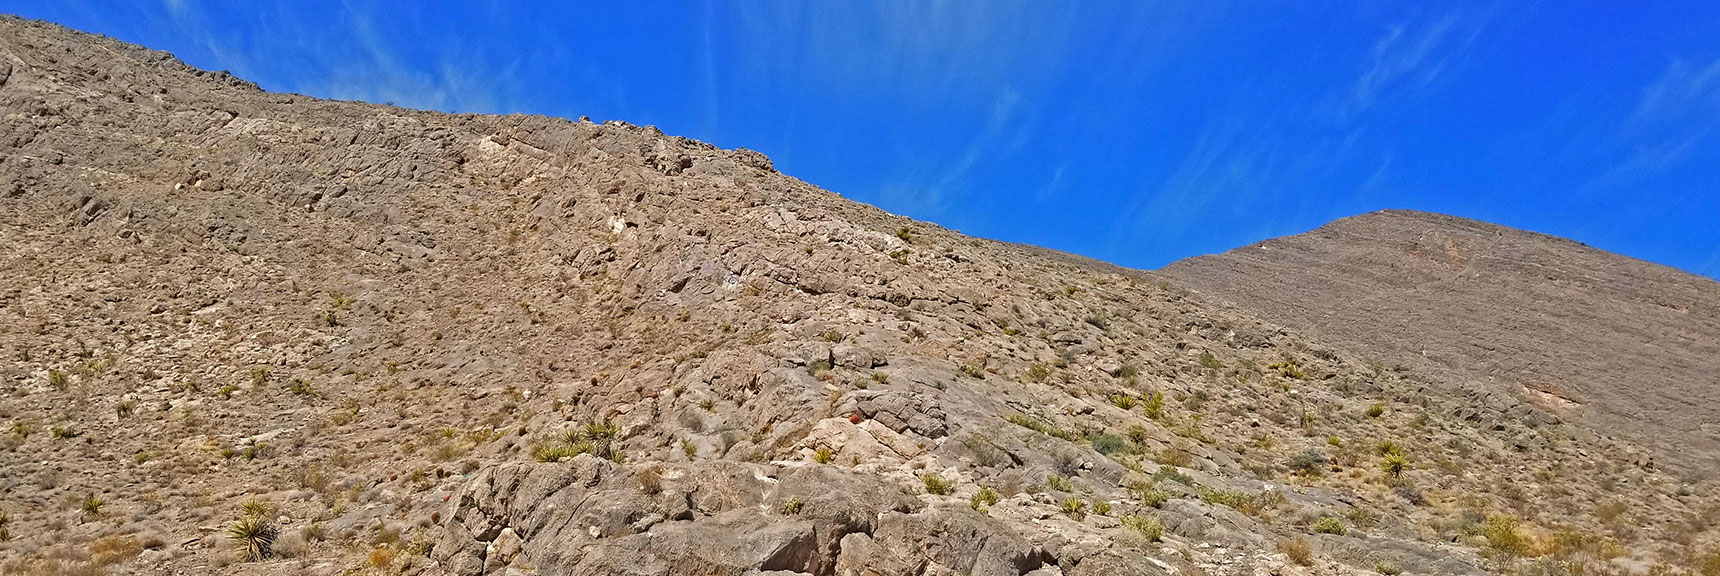 Another Potential Class 3 Summit Ridge Approach South of Trigono Park | Cheyenne Mountain | Las Vegas, Nevada